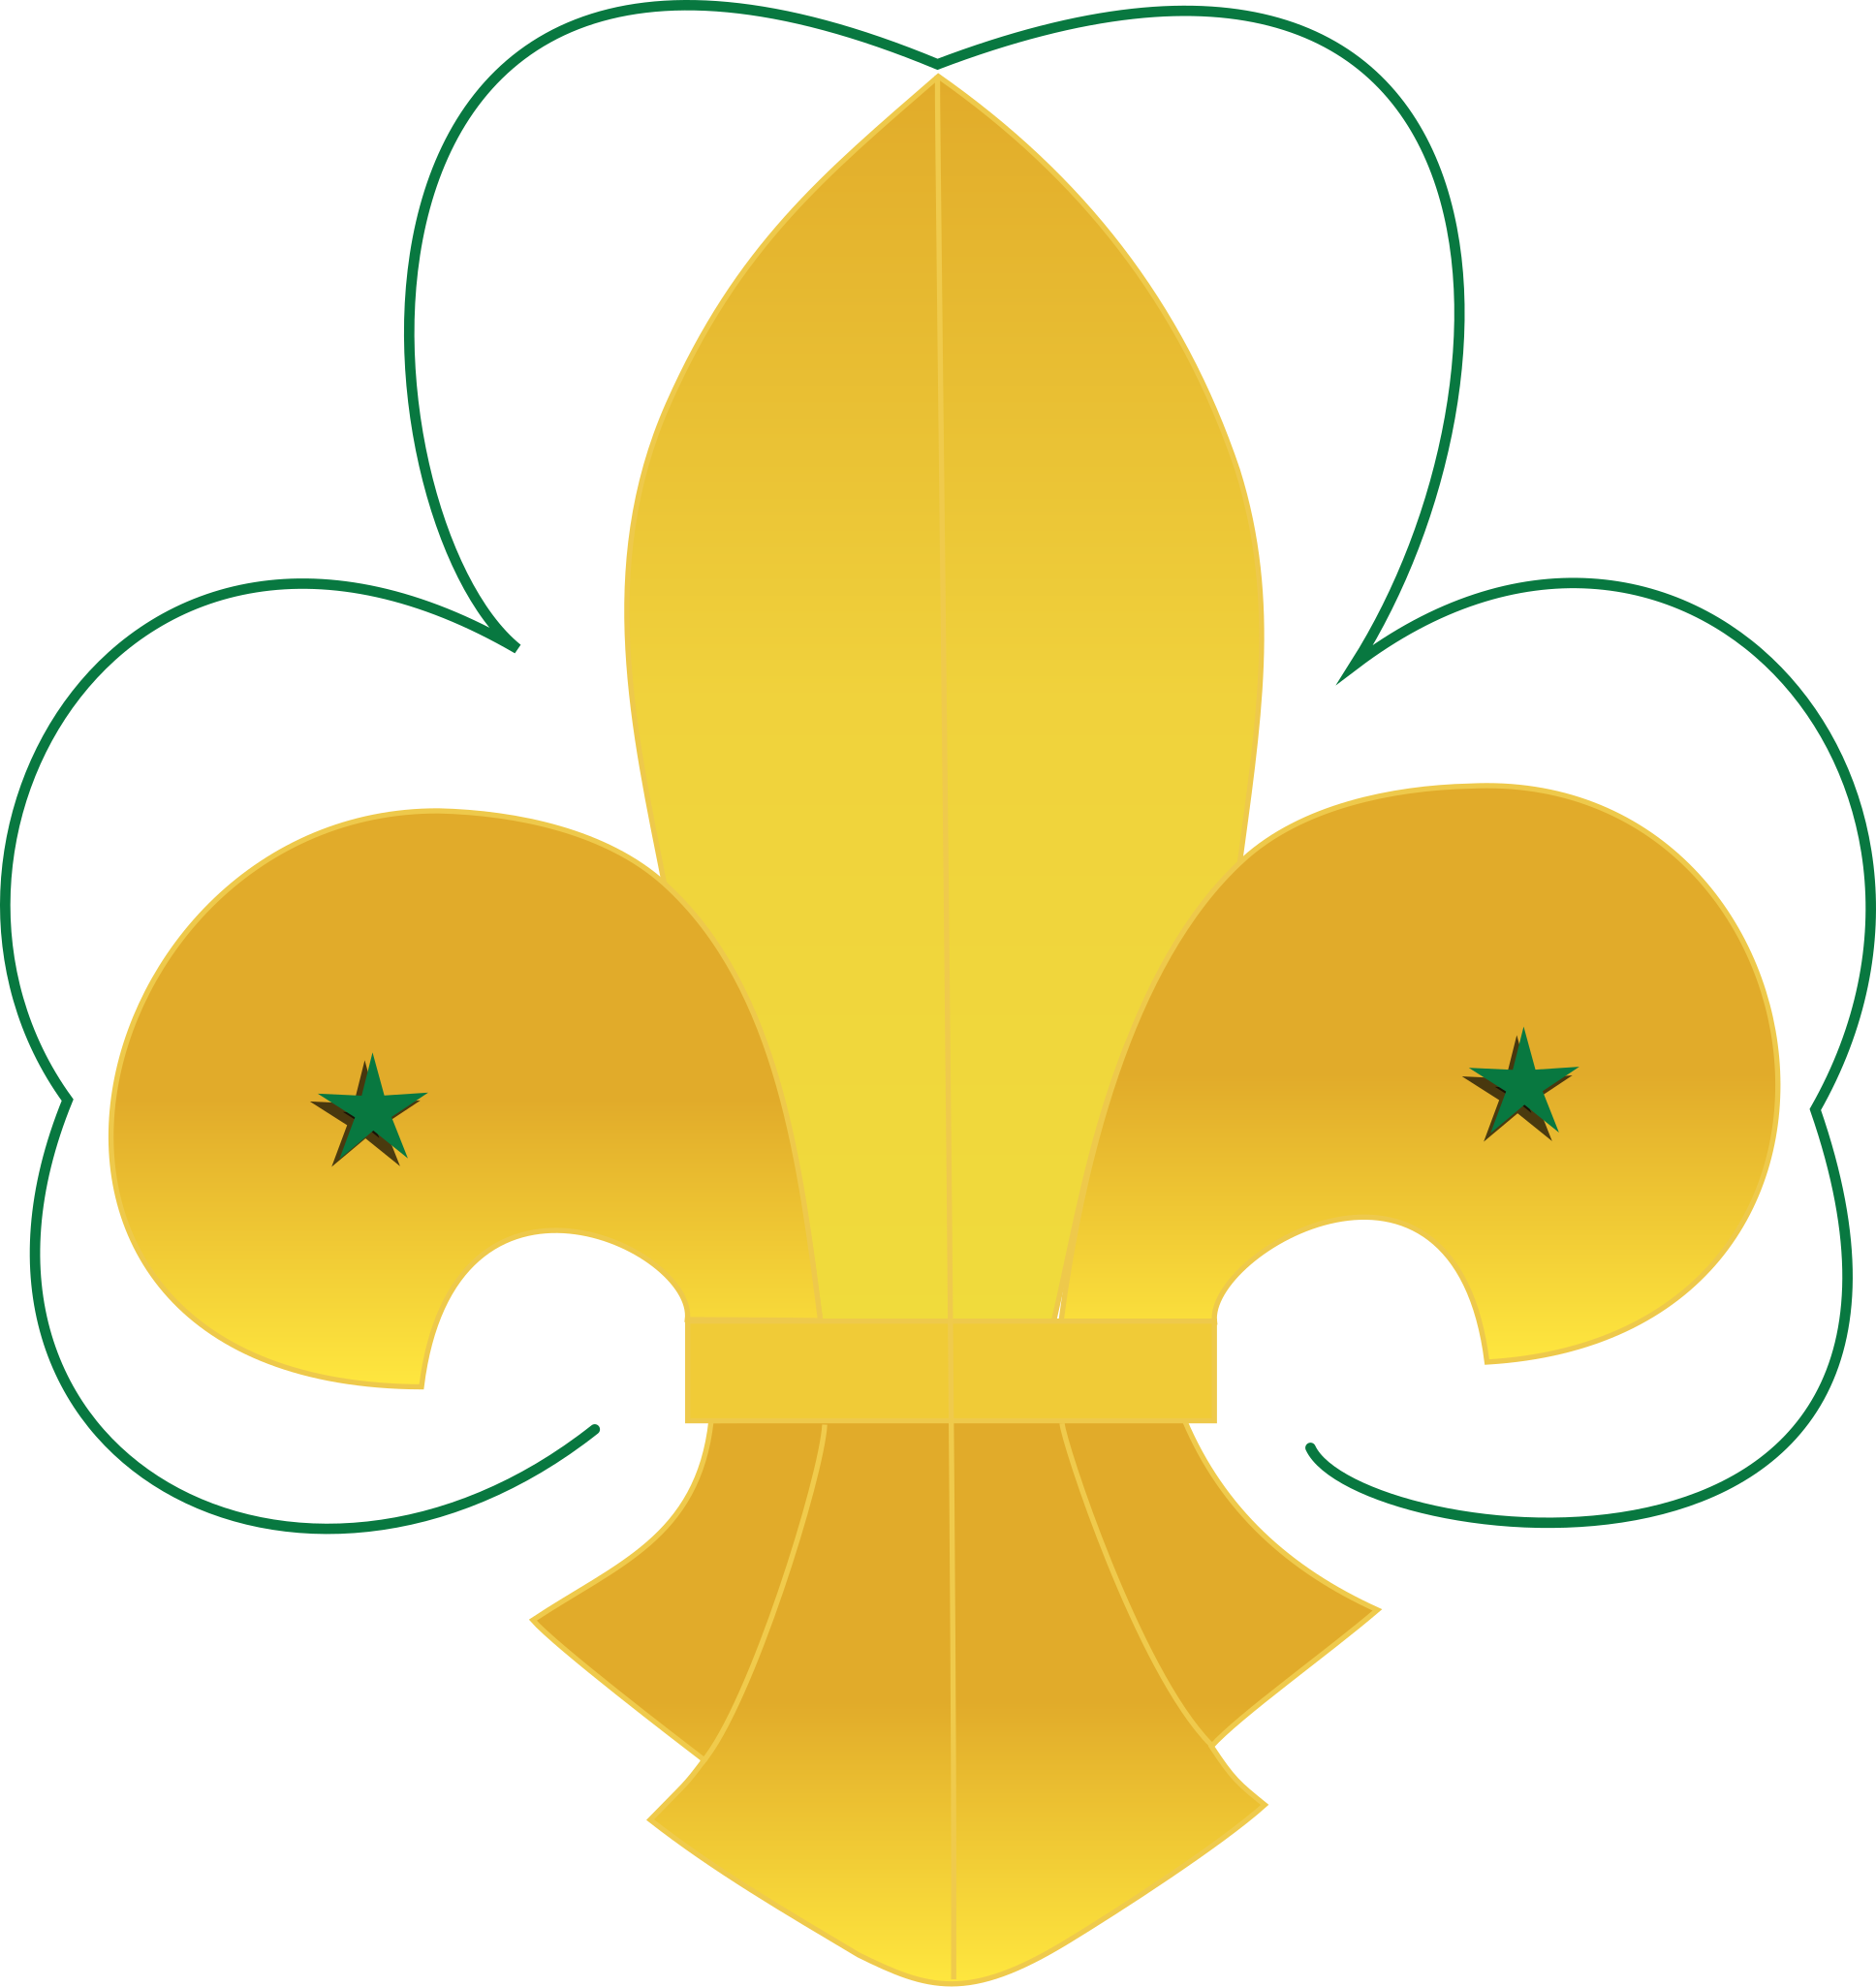 File:WikiProject Scouting fleur-de-lis trefoil.svg - Wikimedia Commons